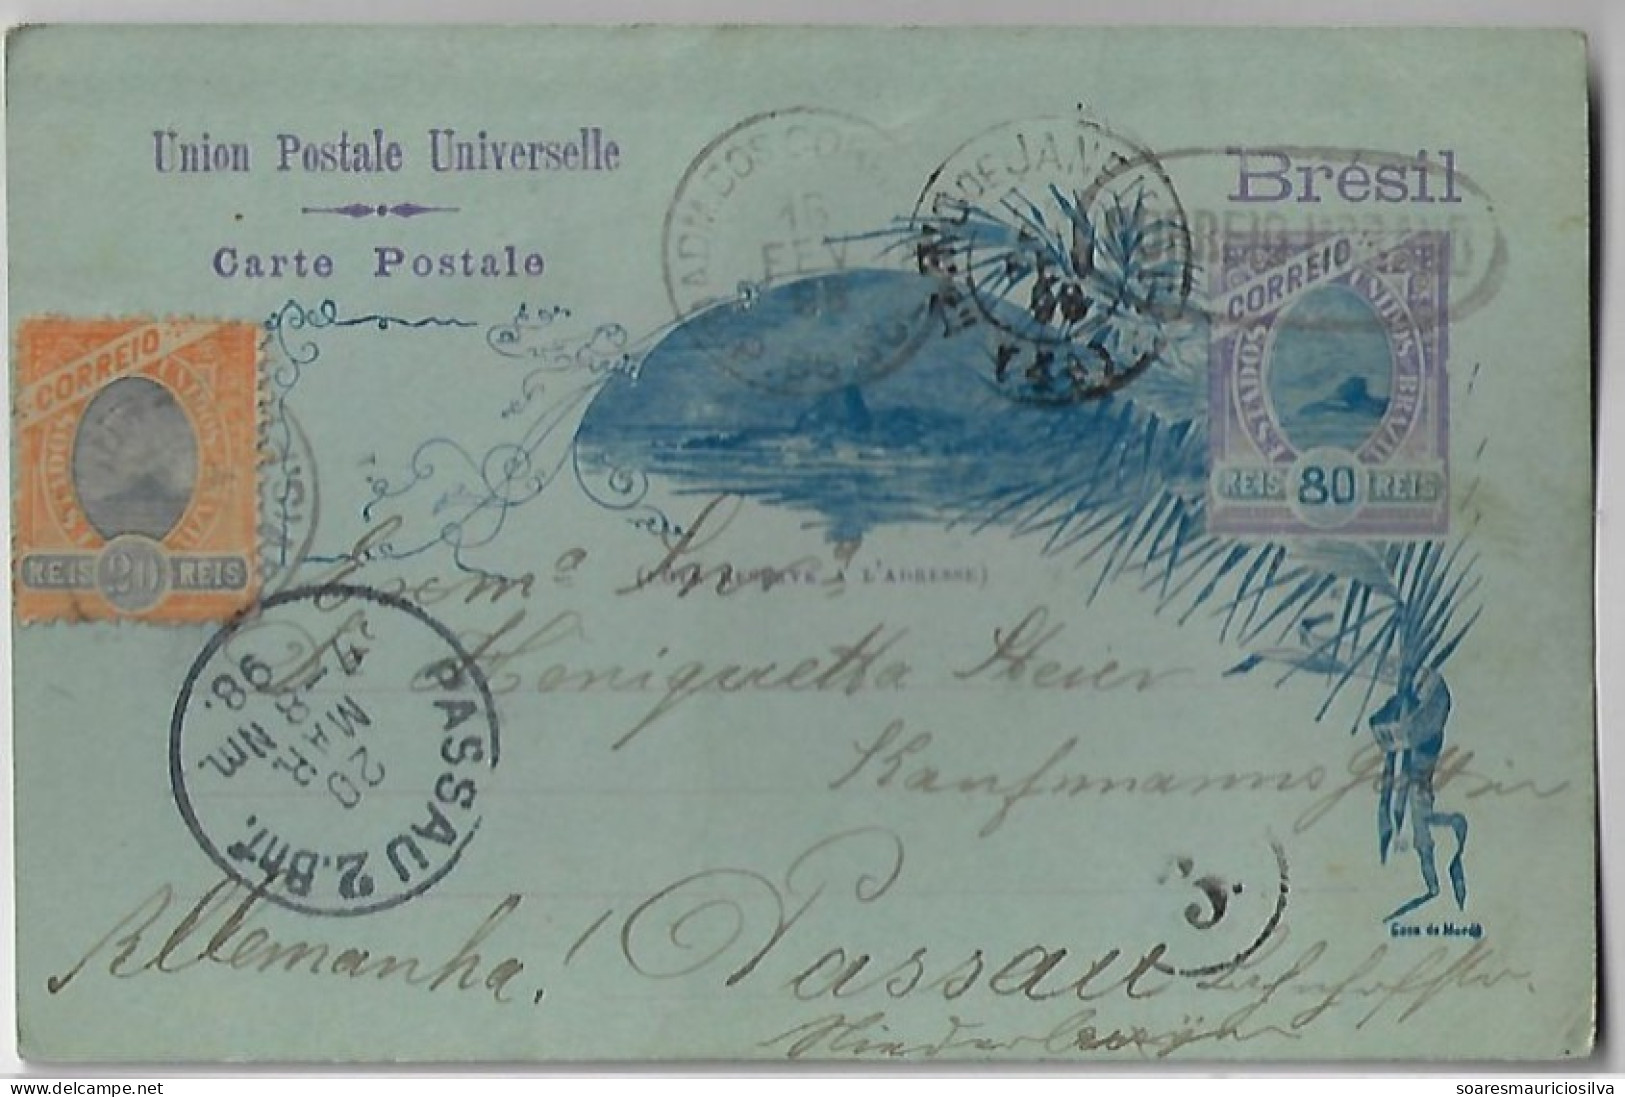 Brazil 1898 Postal Stationery Card Porto Alegre Rio De Janeiro Passau Germany Cancel Correio Urbano Urban Mail - Enteros Postales